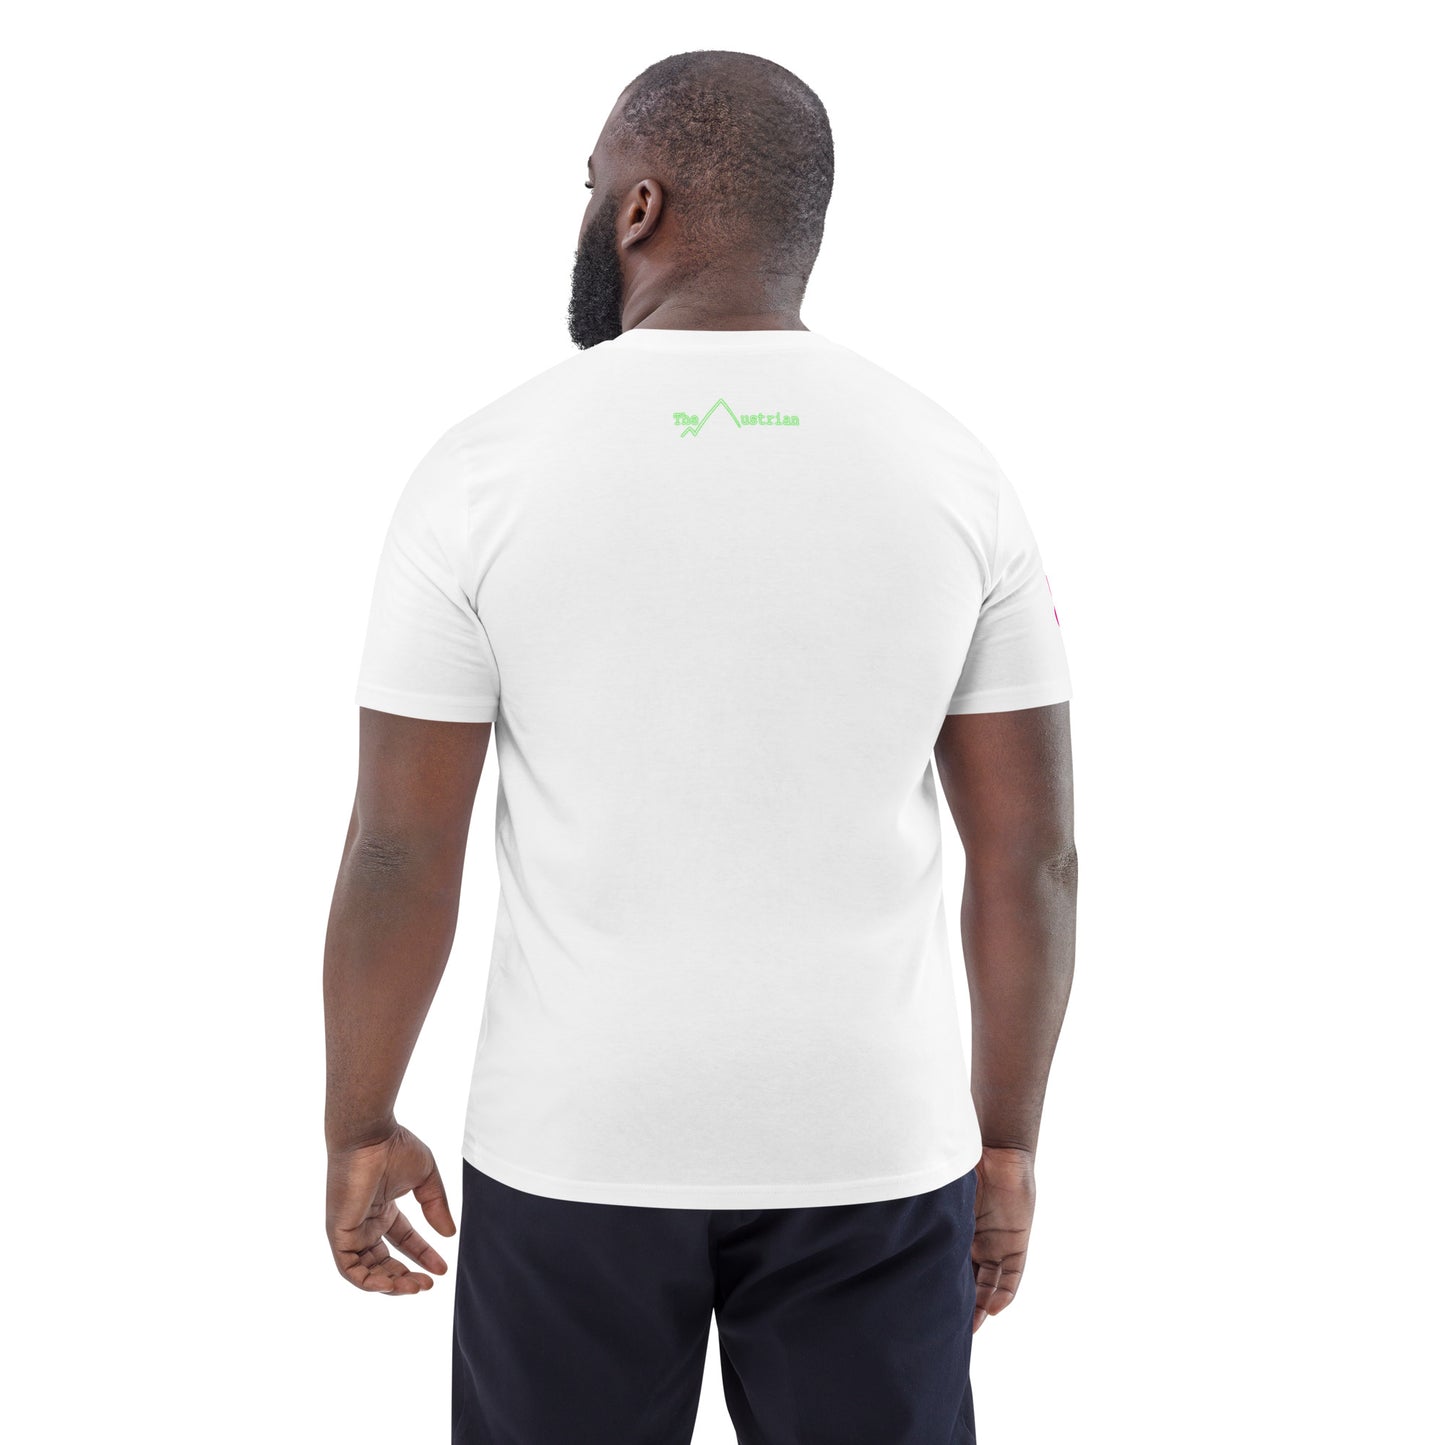 Unisex Bio Baumwoll T-Shirt - The Austrian